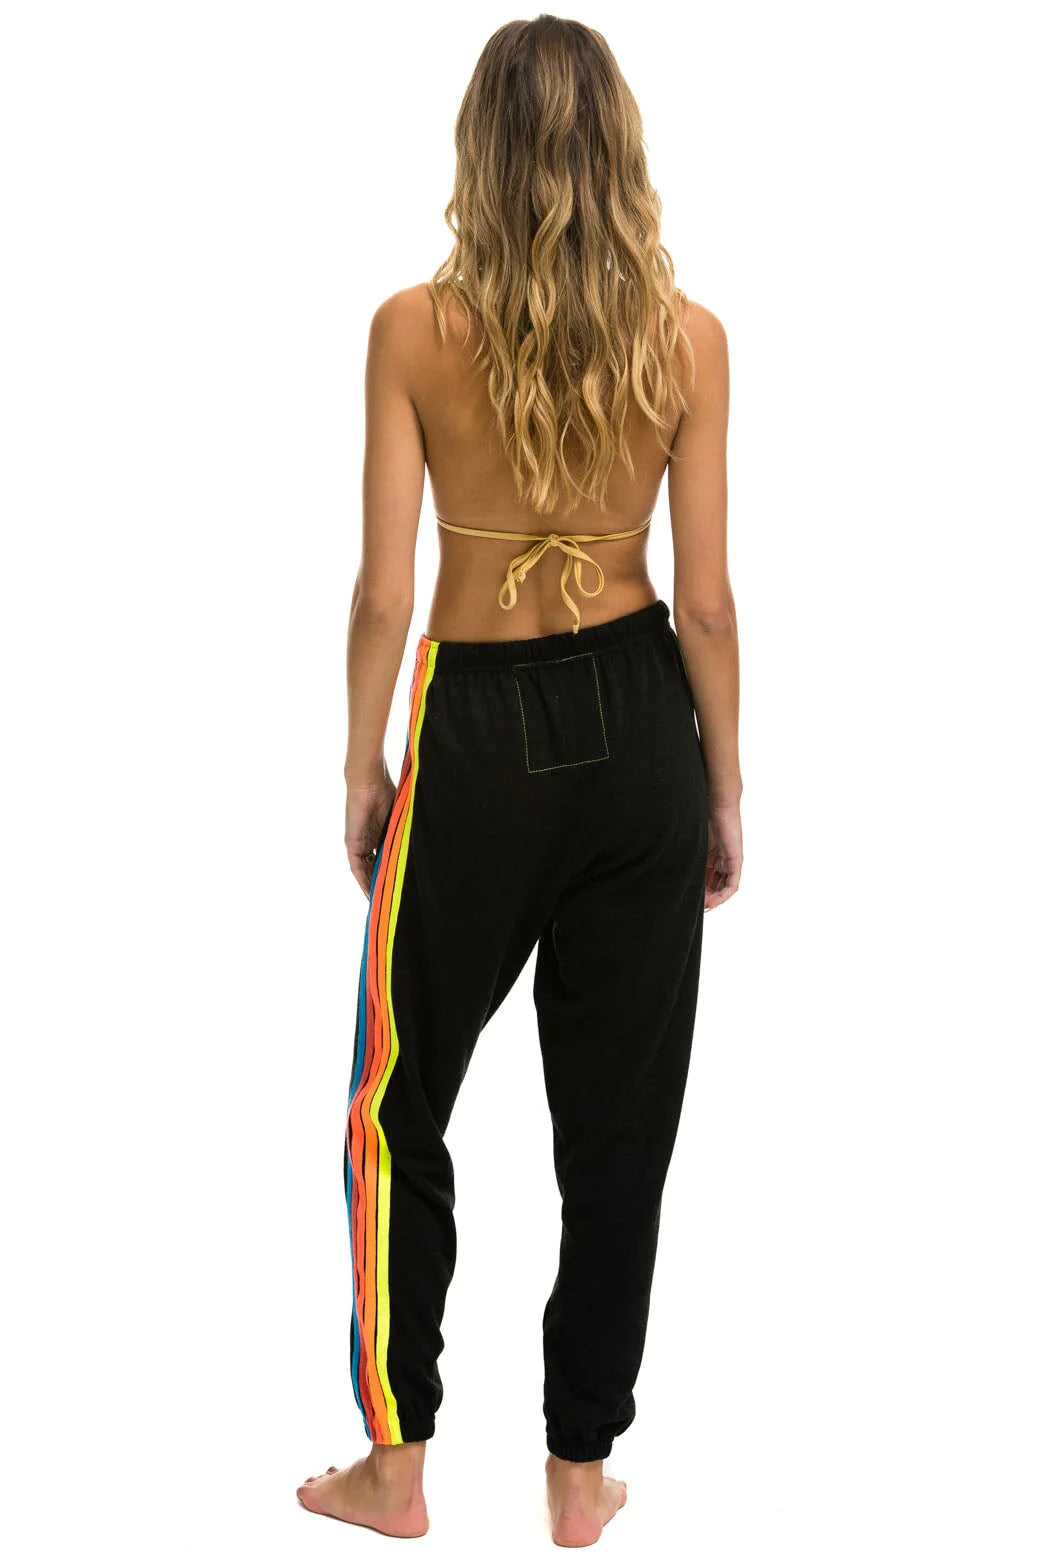 Aviator Nation 5 Stripe Women's Sweatpants Black/Neon Rainbow